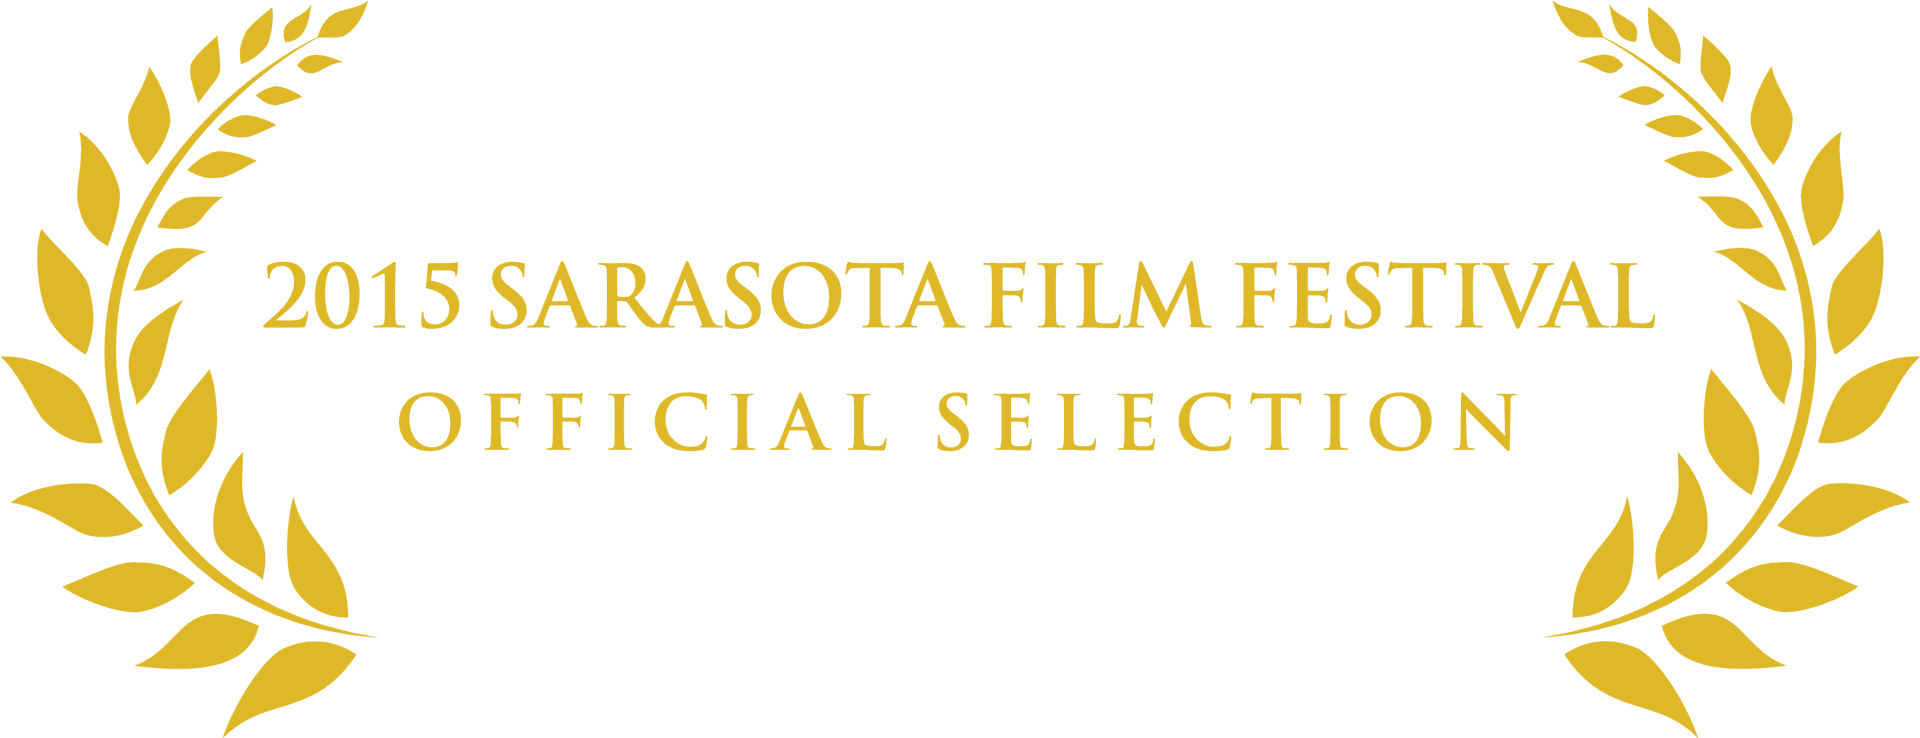 2015 Sarasota Film Festival Official Selection Badge PNG